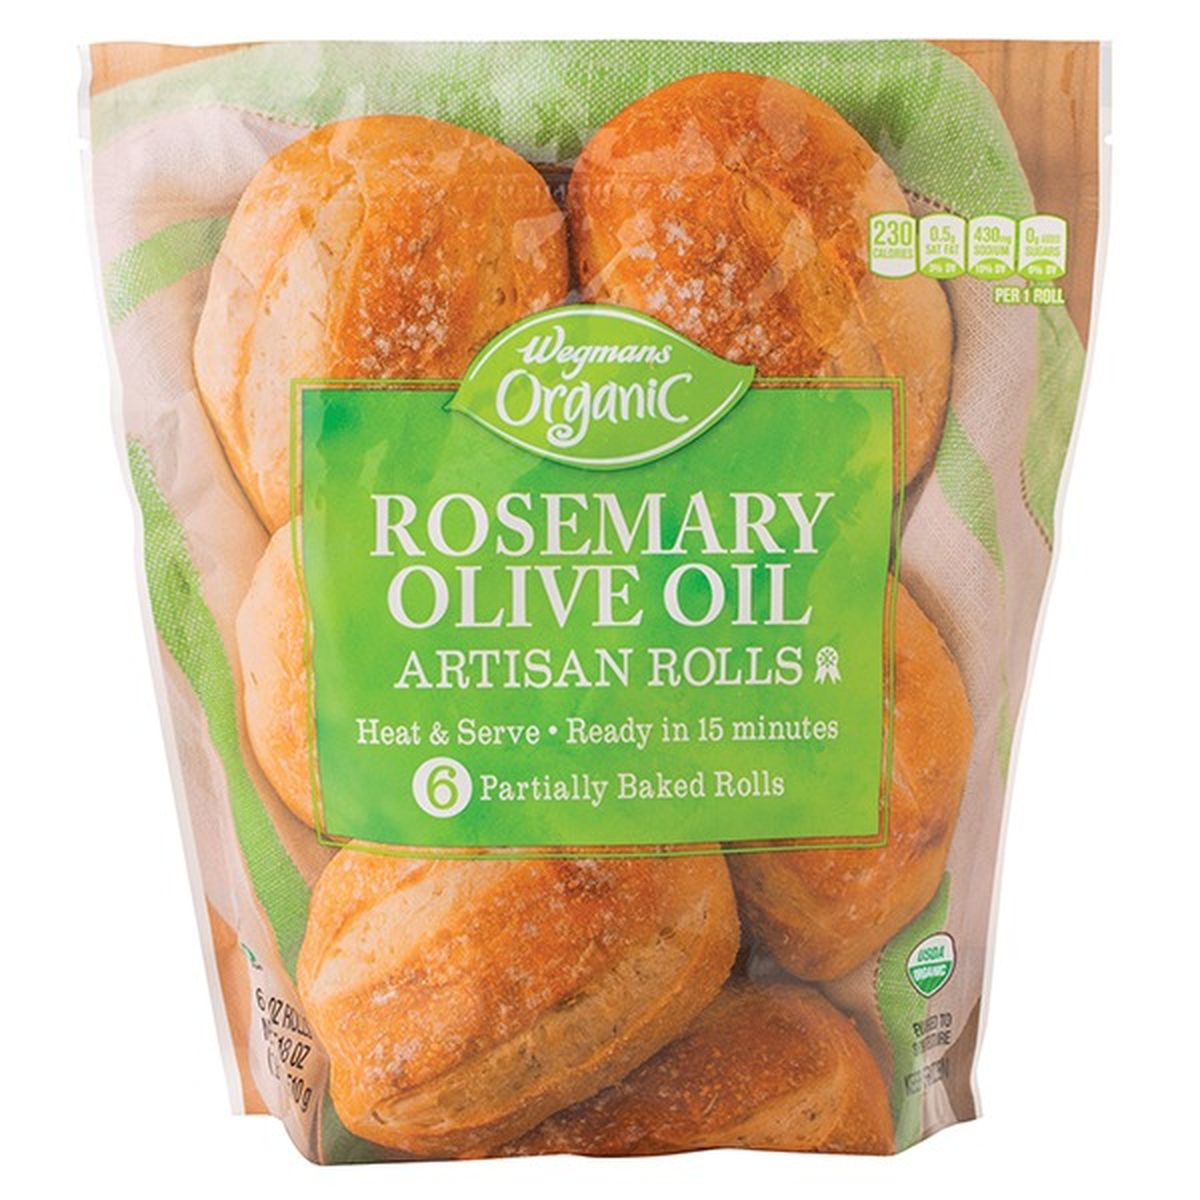 Calories in Wegmans Organic Rolls, Artisan, Rosemary Olive Oil